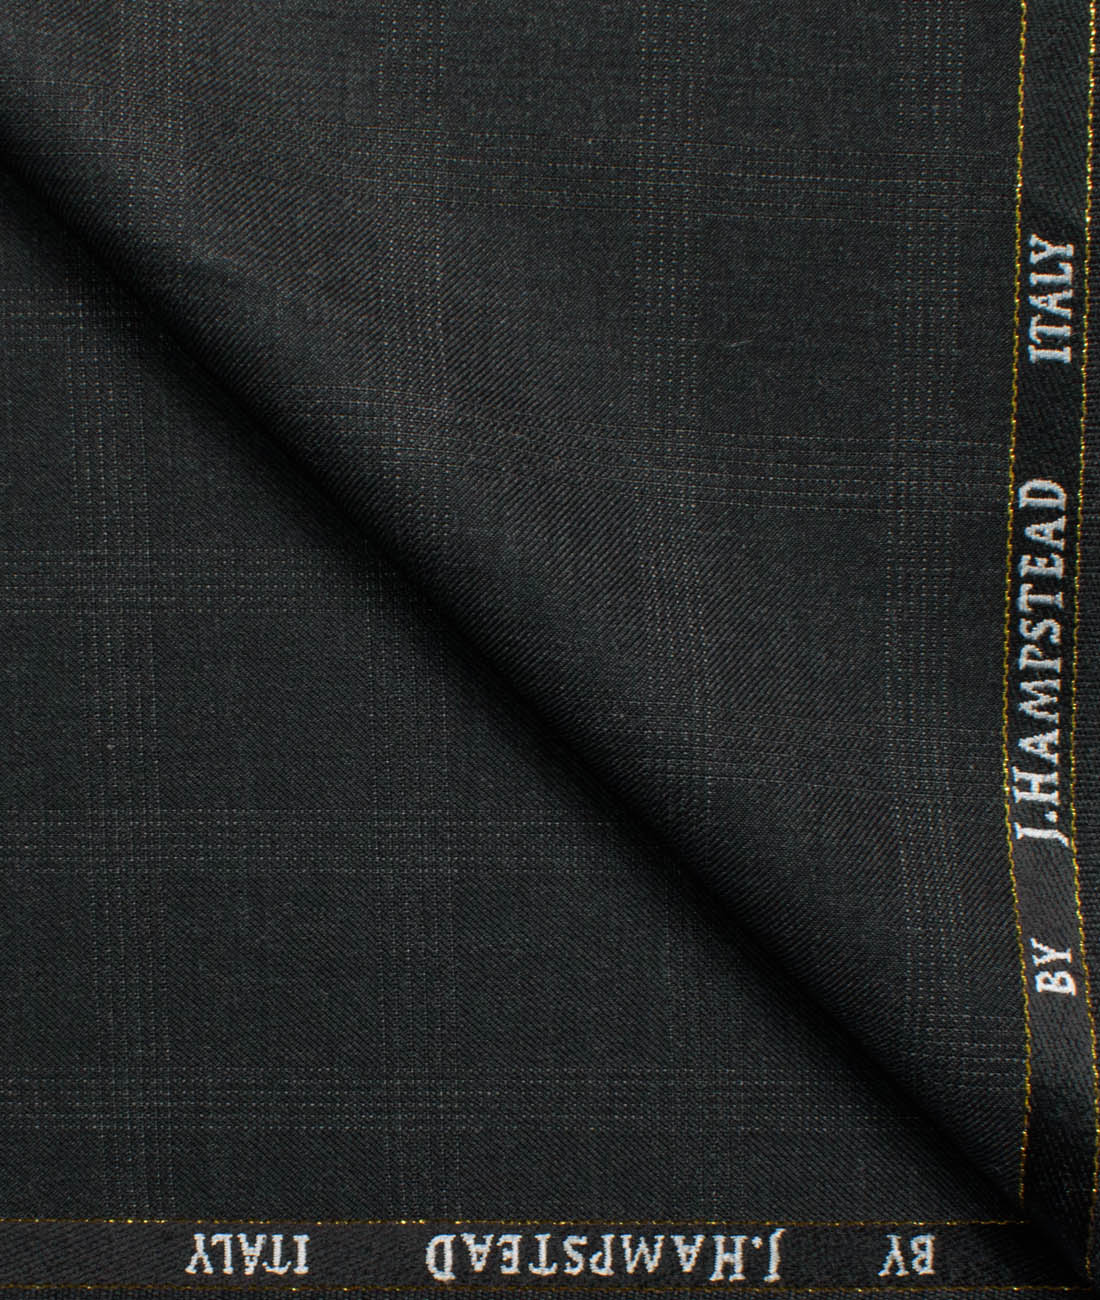 vaultstyle Pure Cotton Solid Trouser Fabric Price in India - Buy vaultstyle  Pure Cotton Solid Trouser Fabric online at Flipkart.com